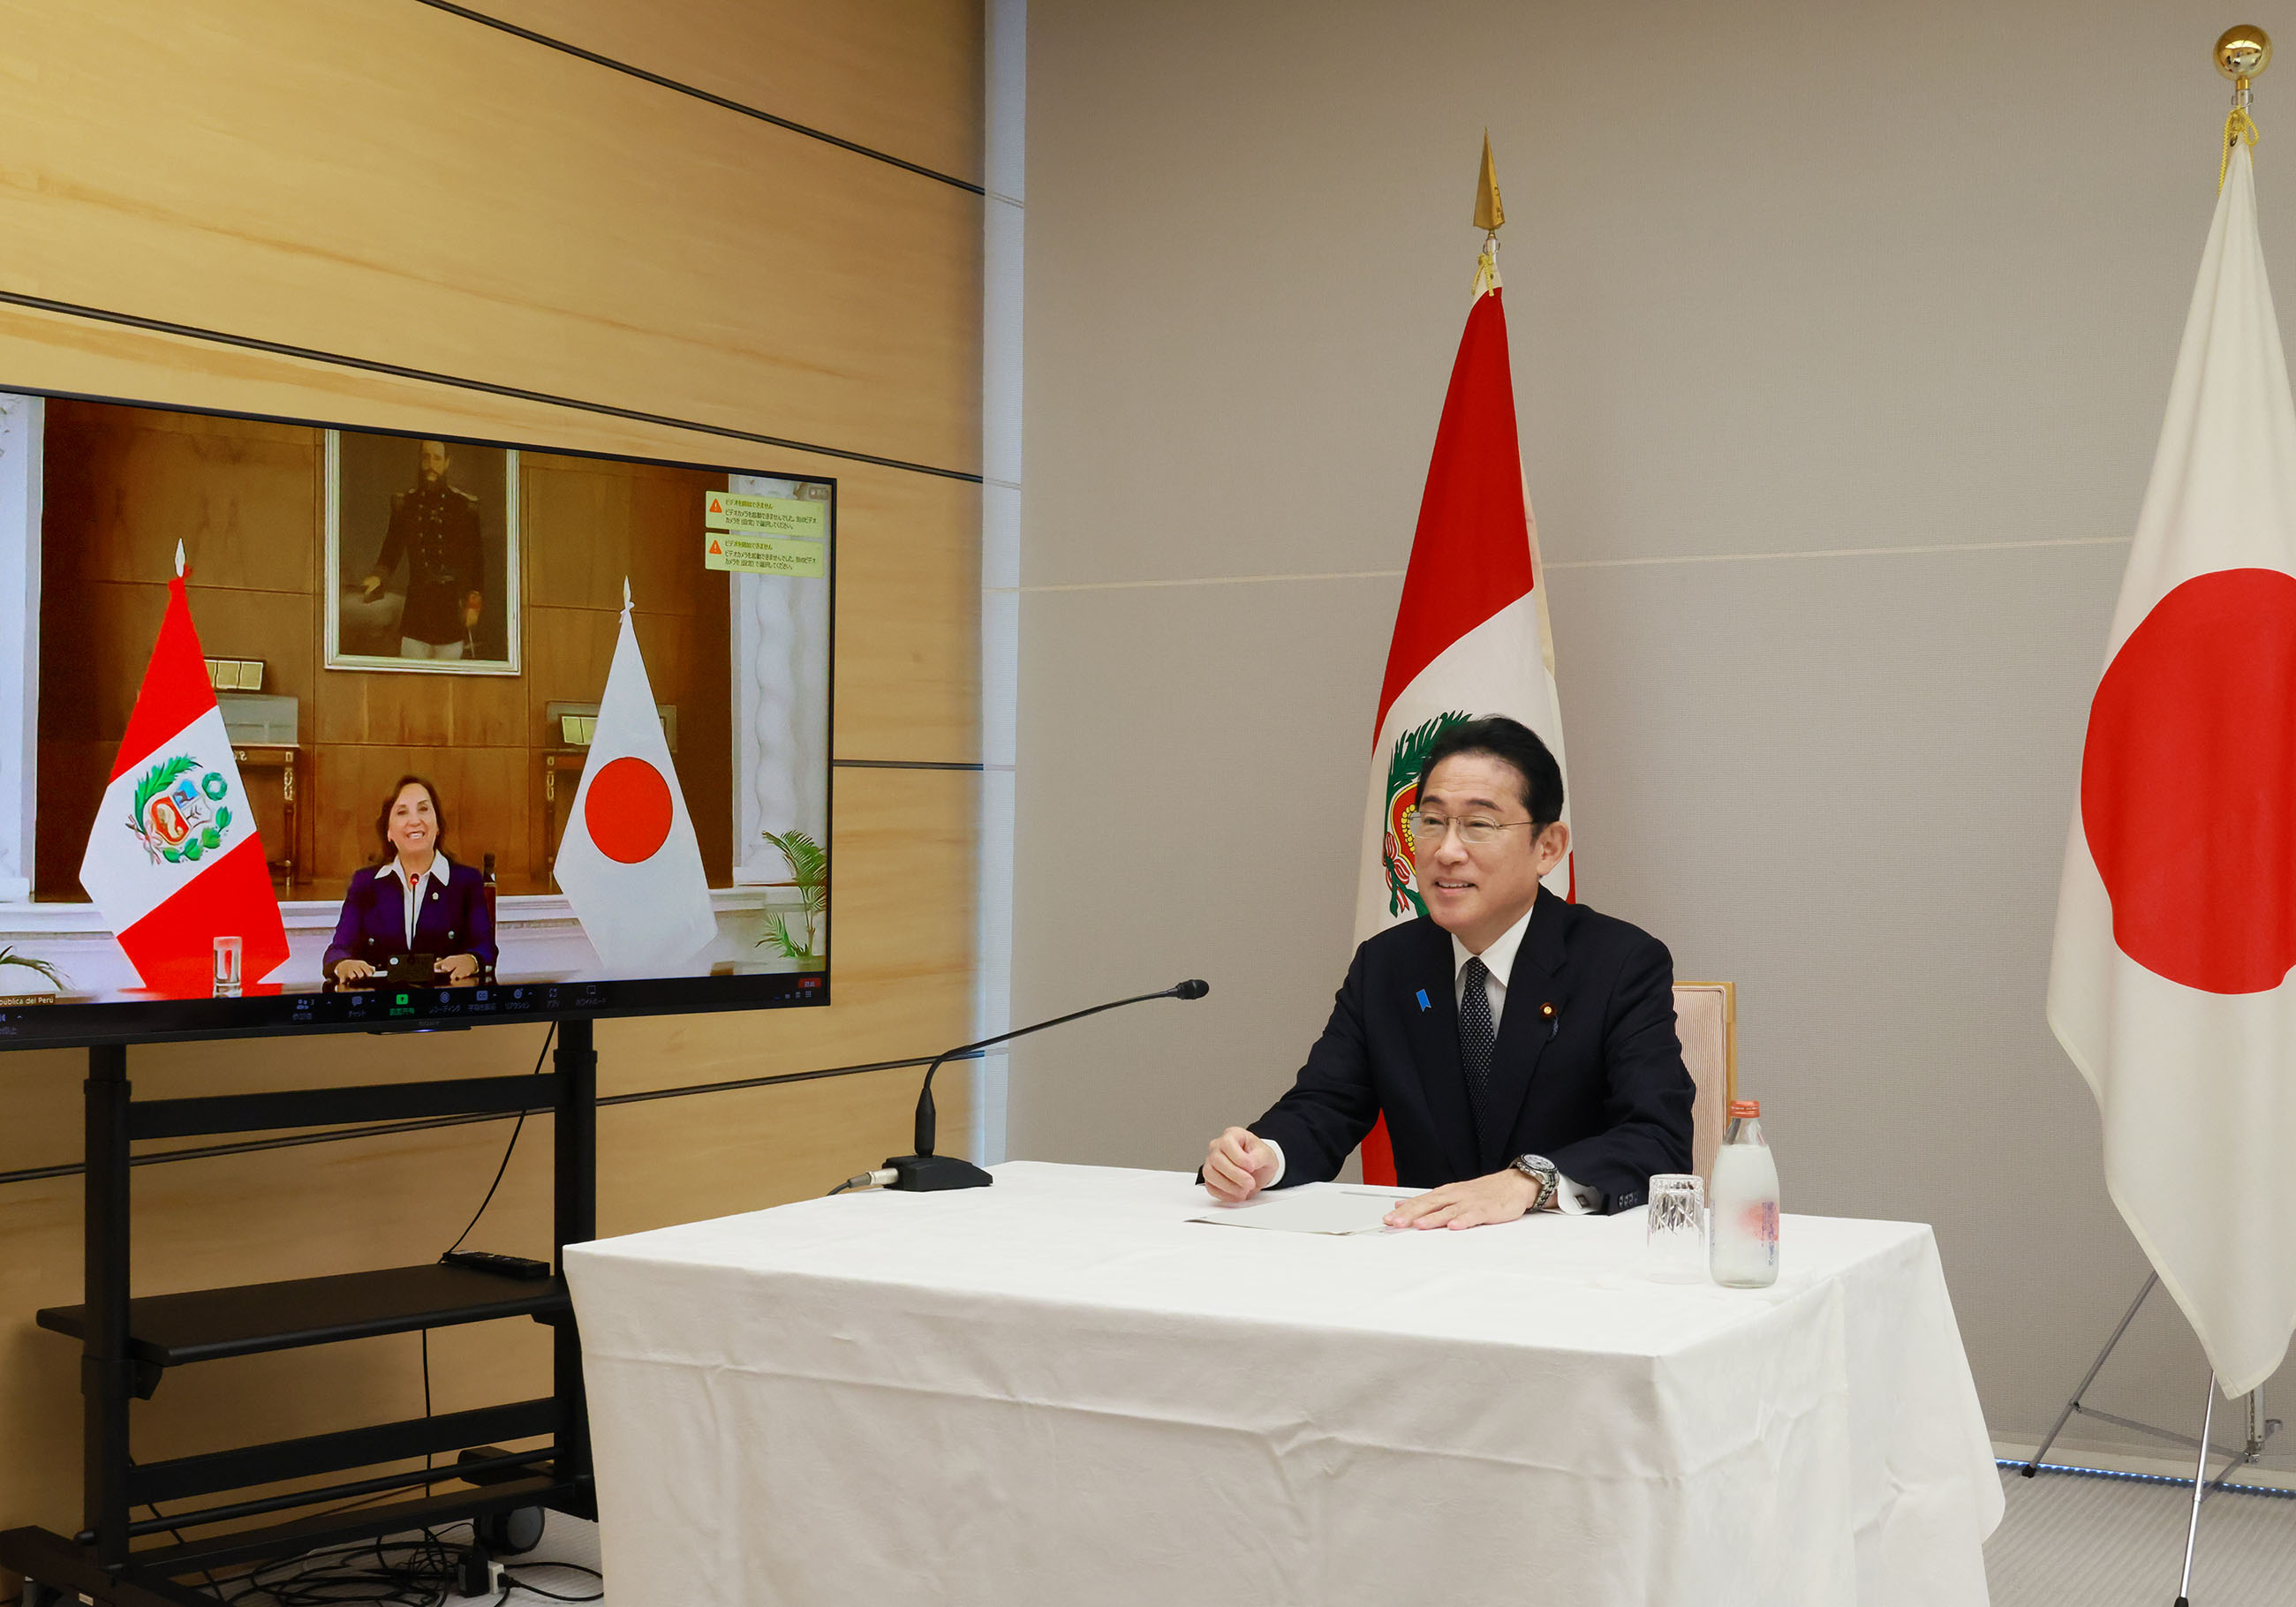 Japan-Peru Summit Video Teleconference Meeting